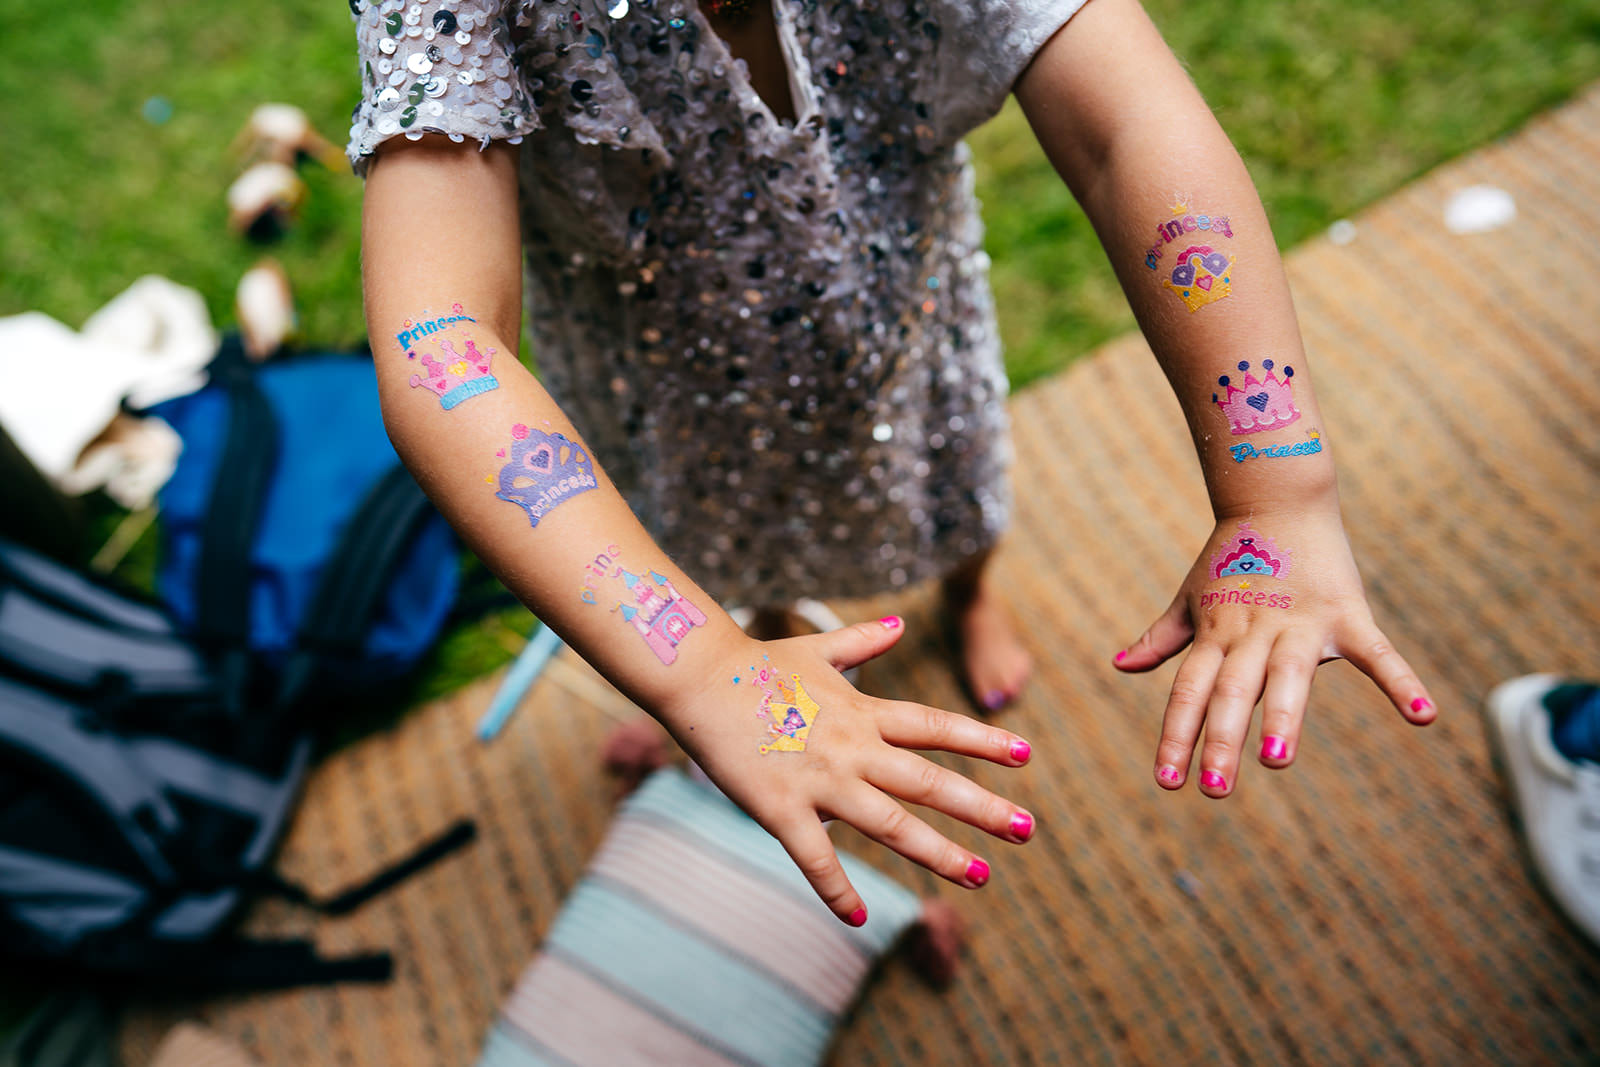 Little girl shows off her festival style glitter tattoos 